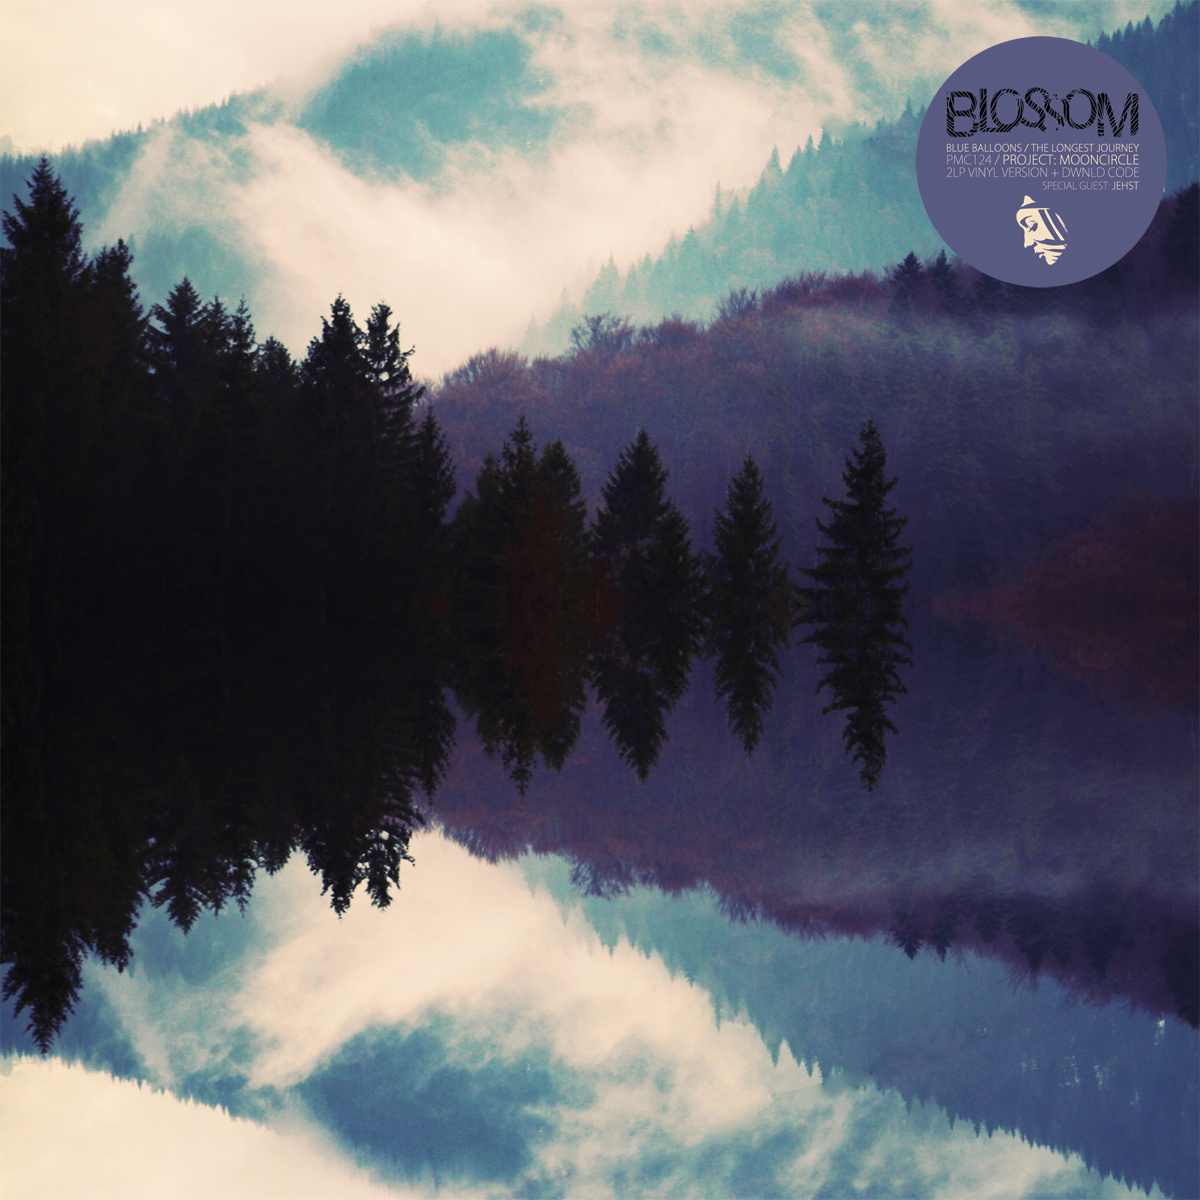 Blossom "Blue Balloons / The Longest Journey" Release